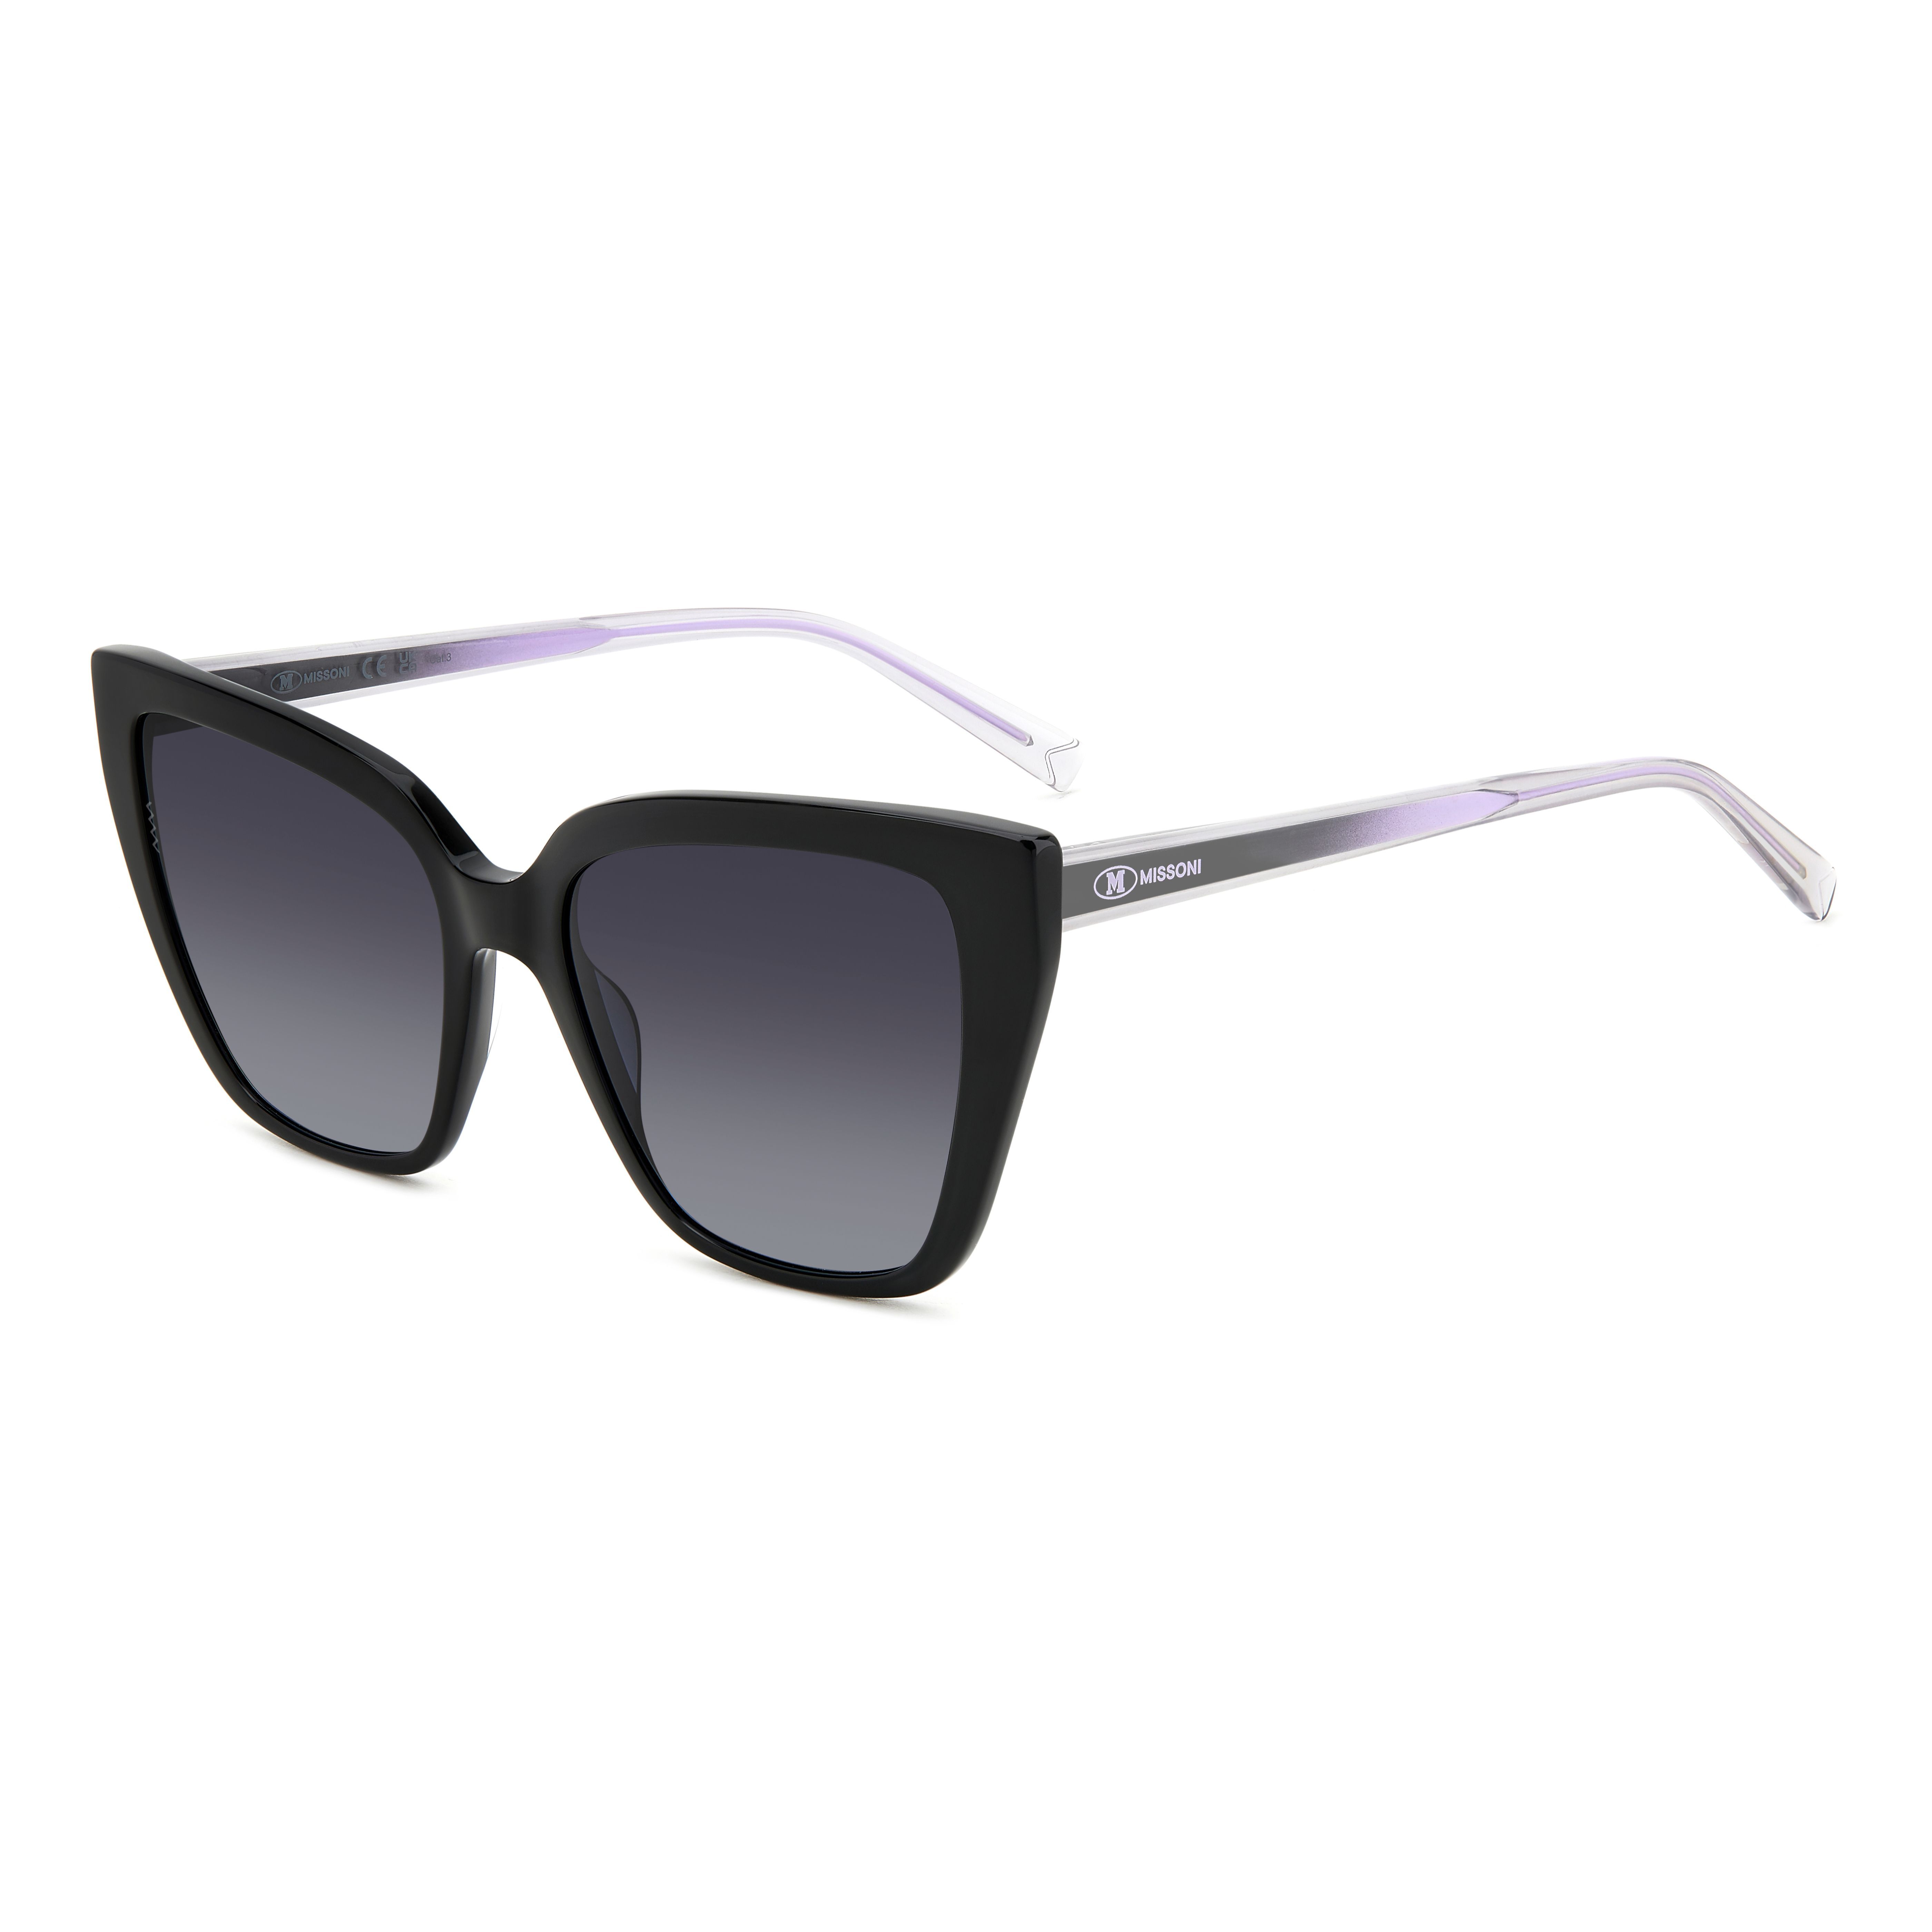 MMI 0177 S Cateye Sunglasses 8079O - size 56